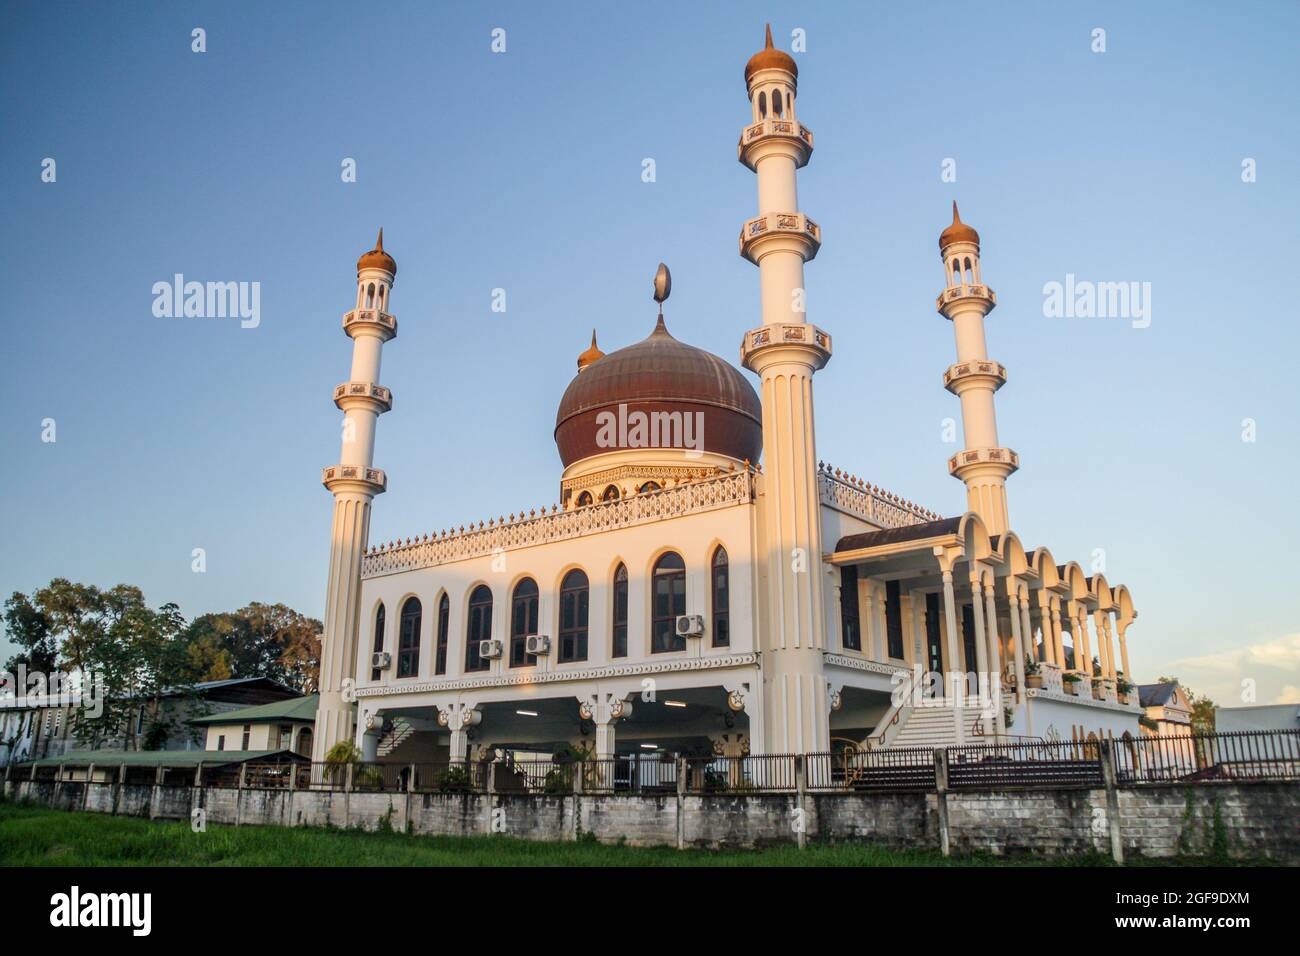 Mezquita Kaizerstraat en Paramaribo, capital de Surinam. Foto de stock